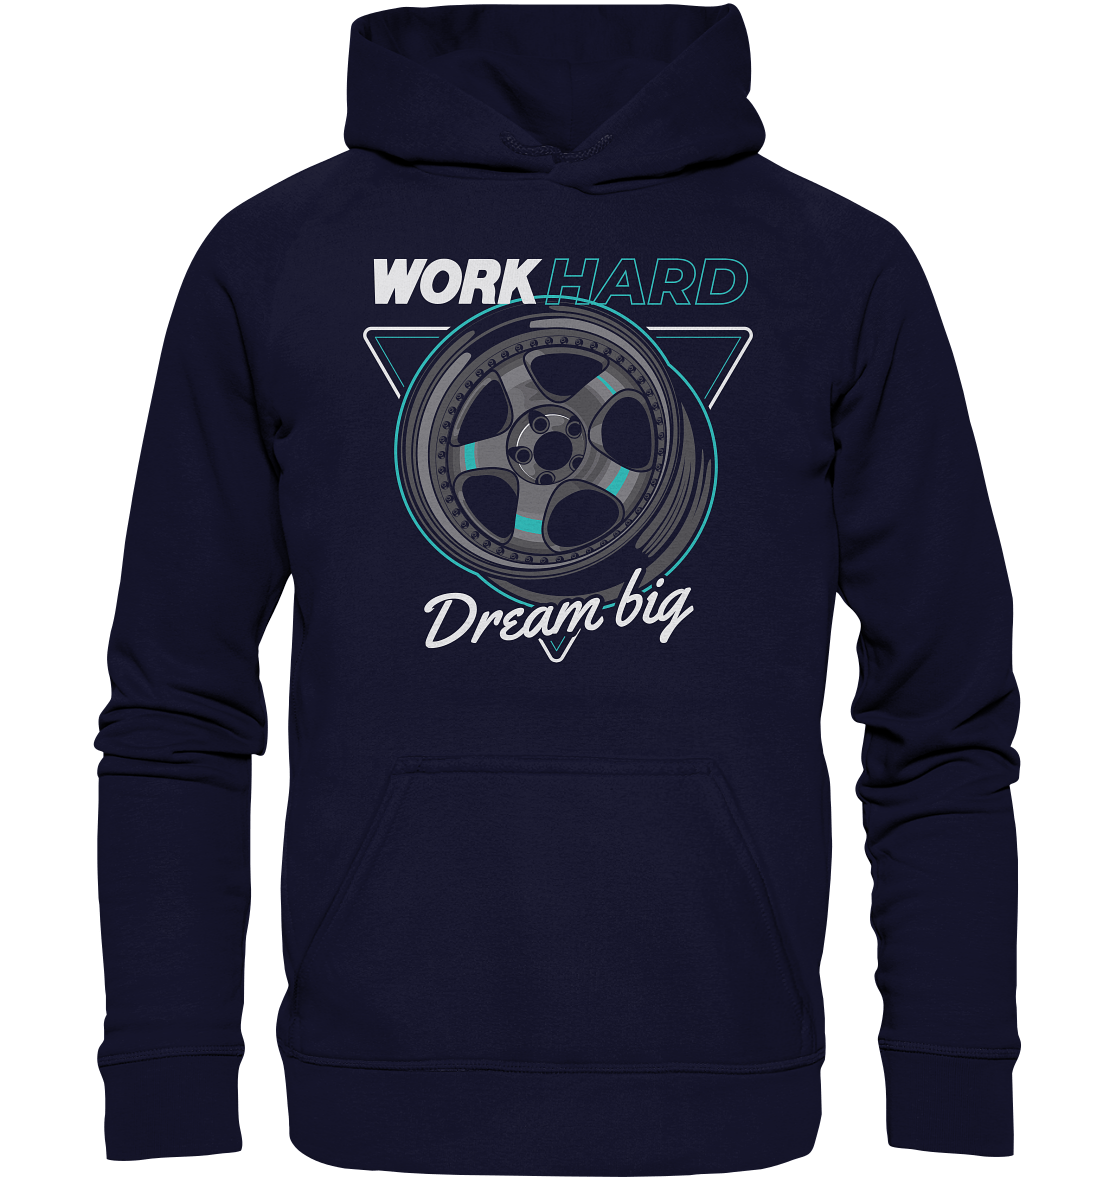 WORK hard - Basic Unisex Hoodie XL - MotoMerch.de